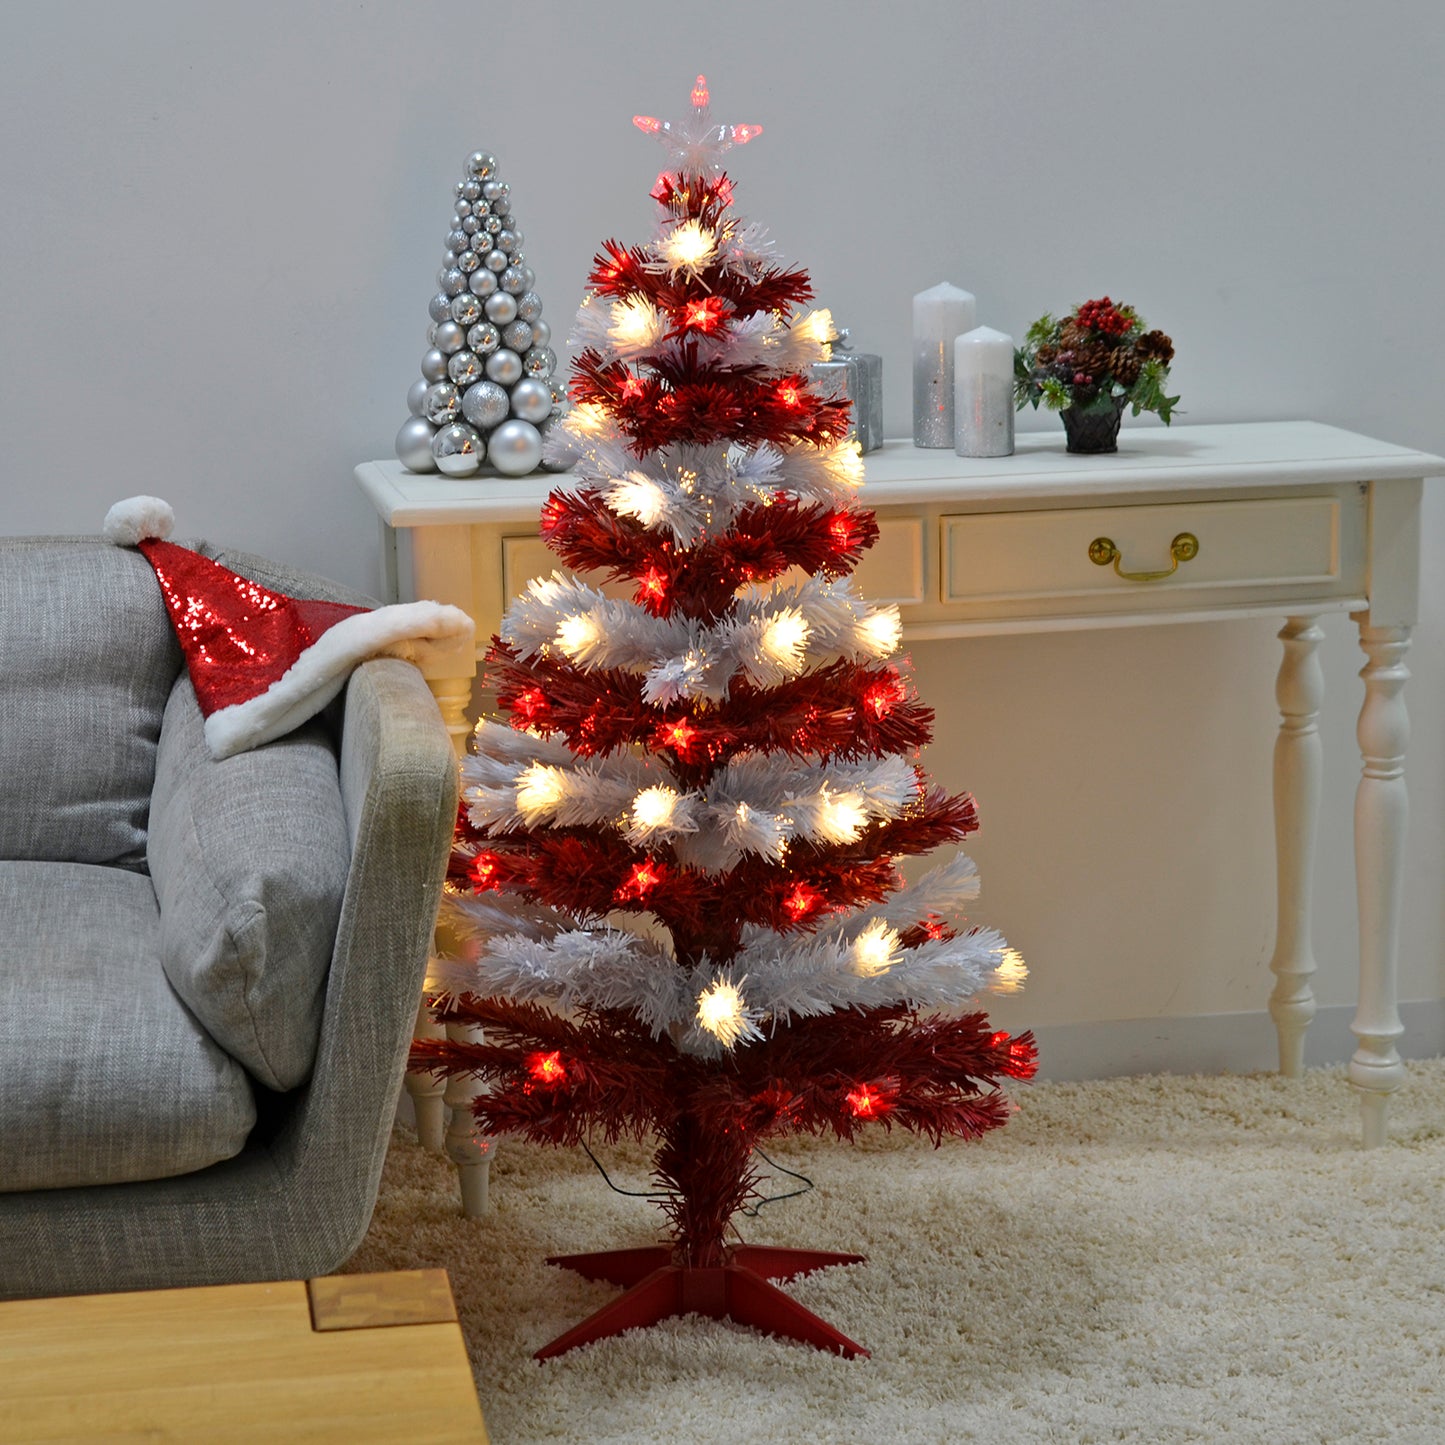 Mr Crimbo 4ft Fibre Optic Christmas Tree Stripe Red Blue - MrCrimbo.co.uk -XS6422 - Red/White -4ft christmas tree